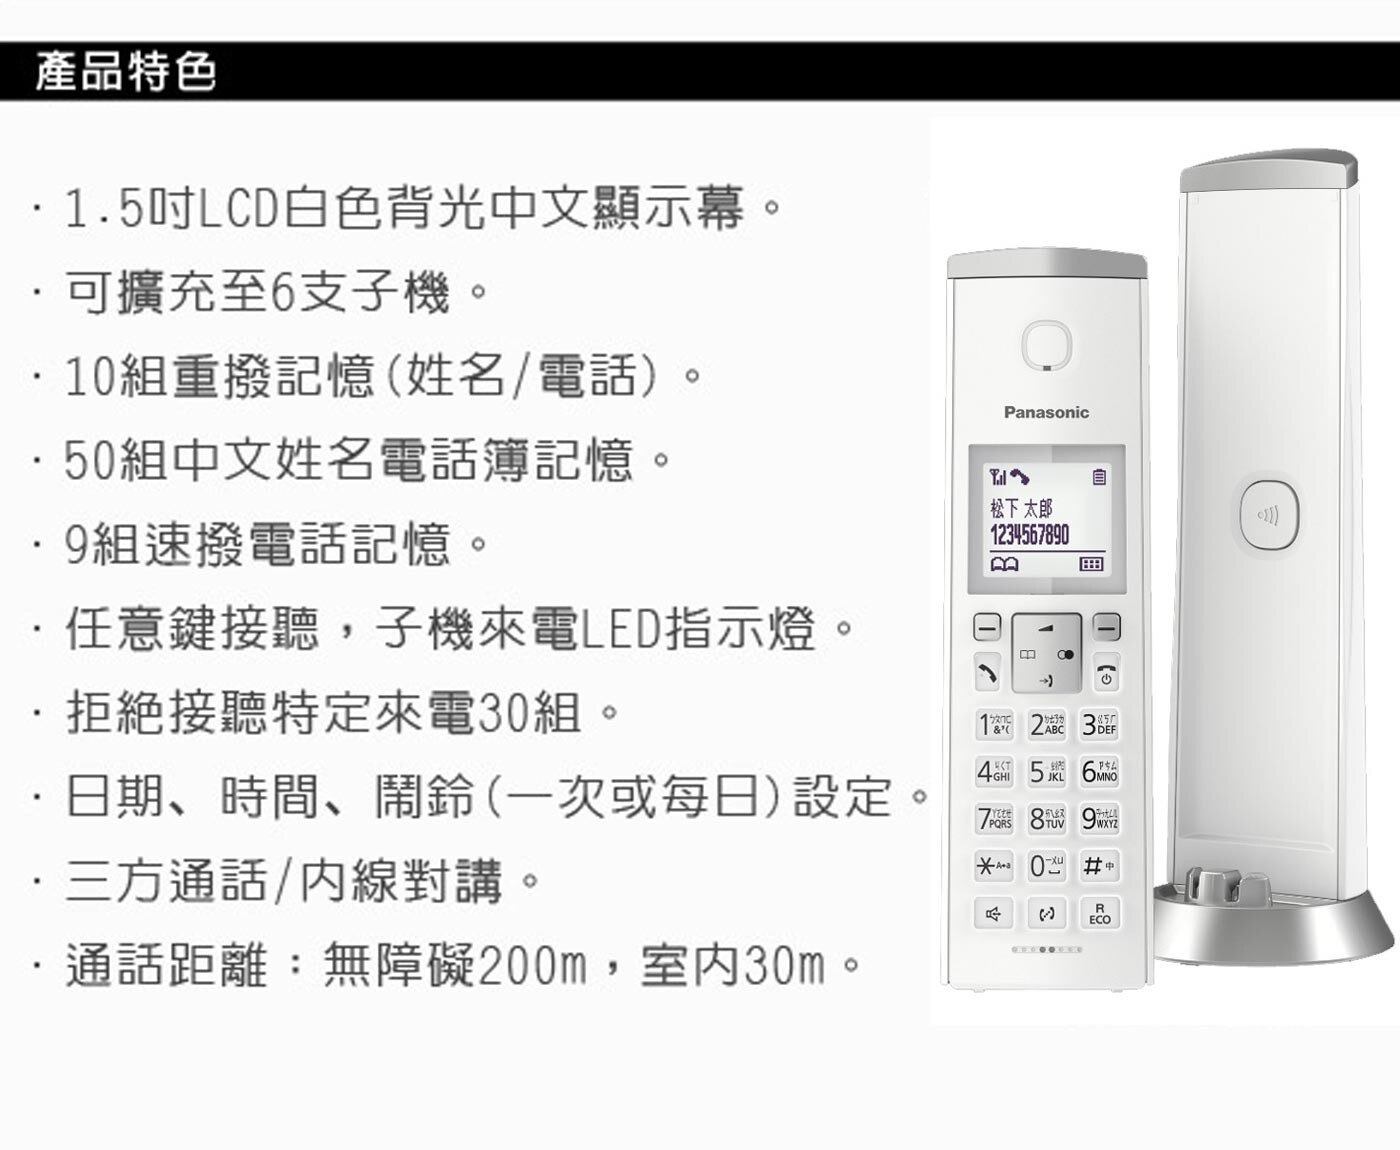 Panasonic 國際KX-TGK210 無線電話白，通話18hr、待機時間200hr，輕巧設計不占空間的筒狀外型，多子機擴充功能，中文輸入顯示。